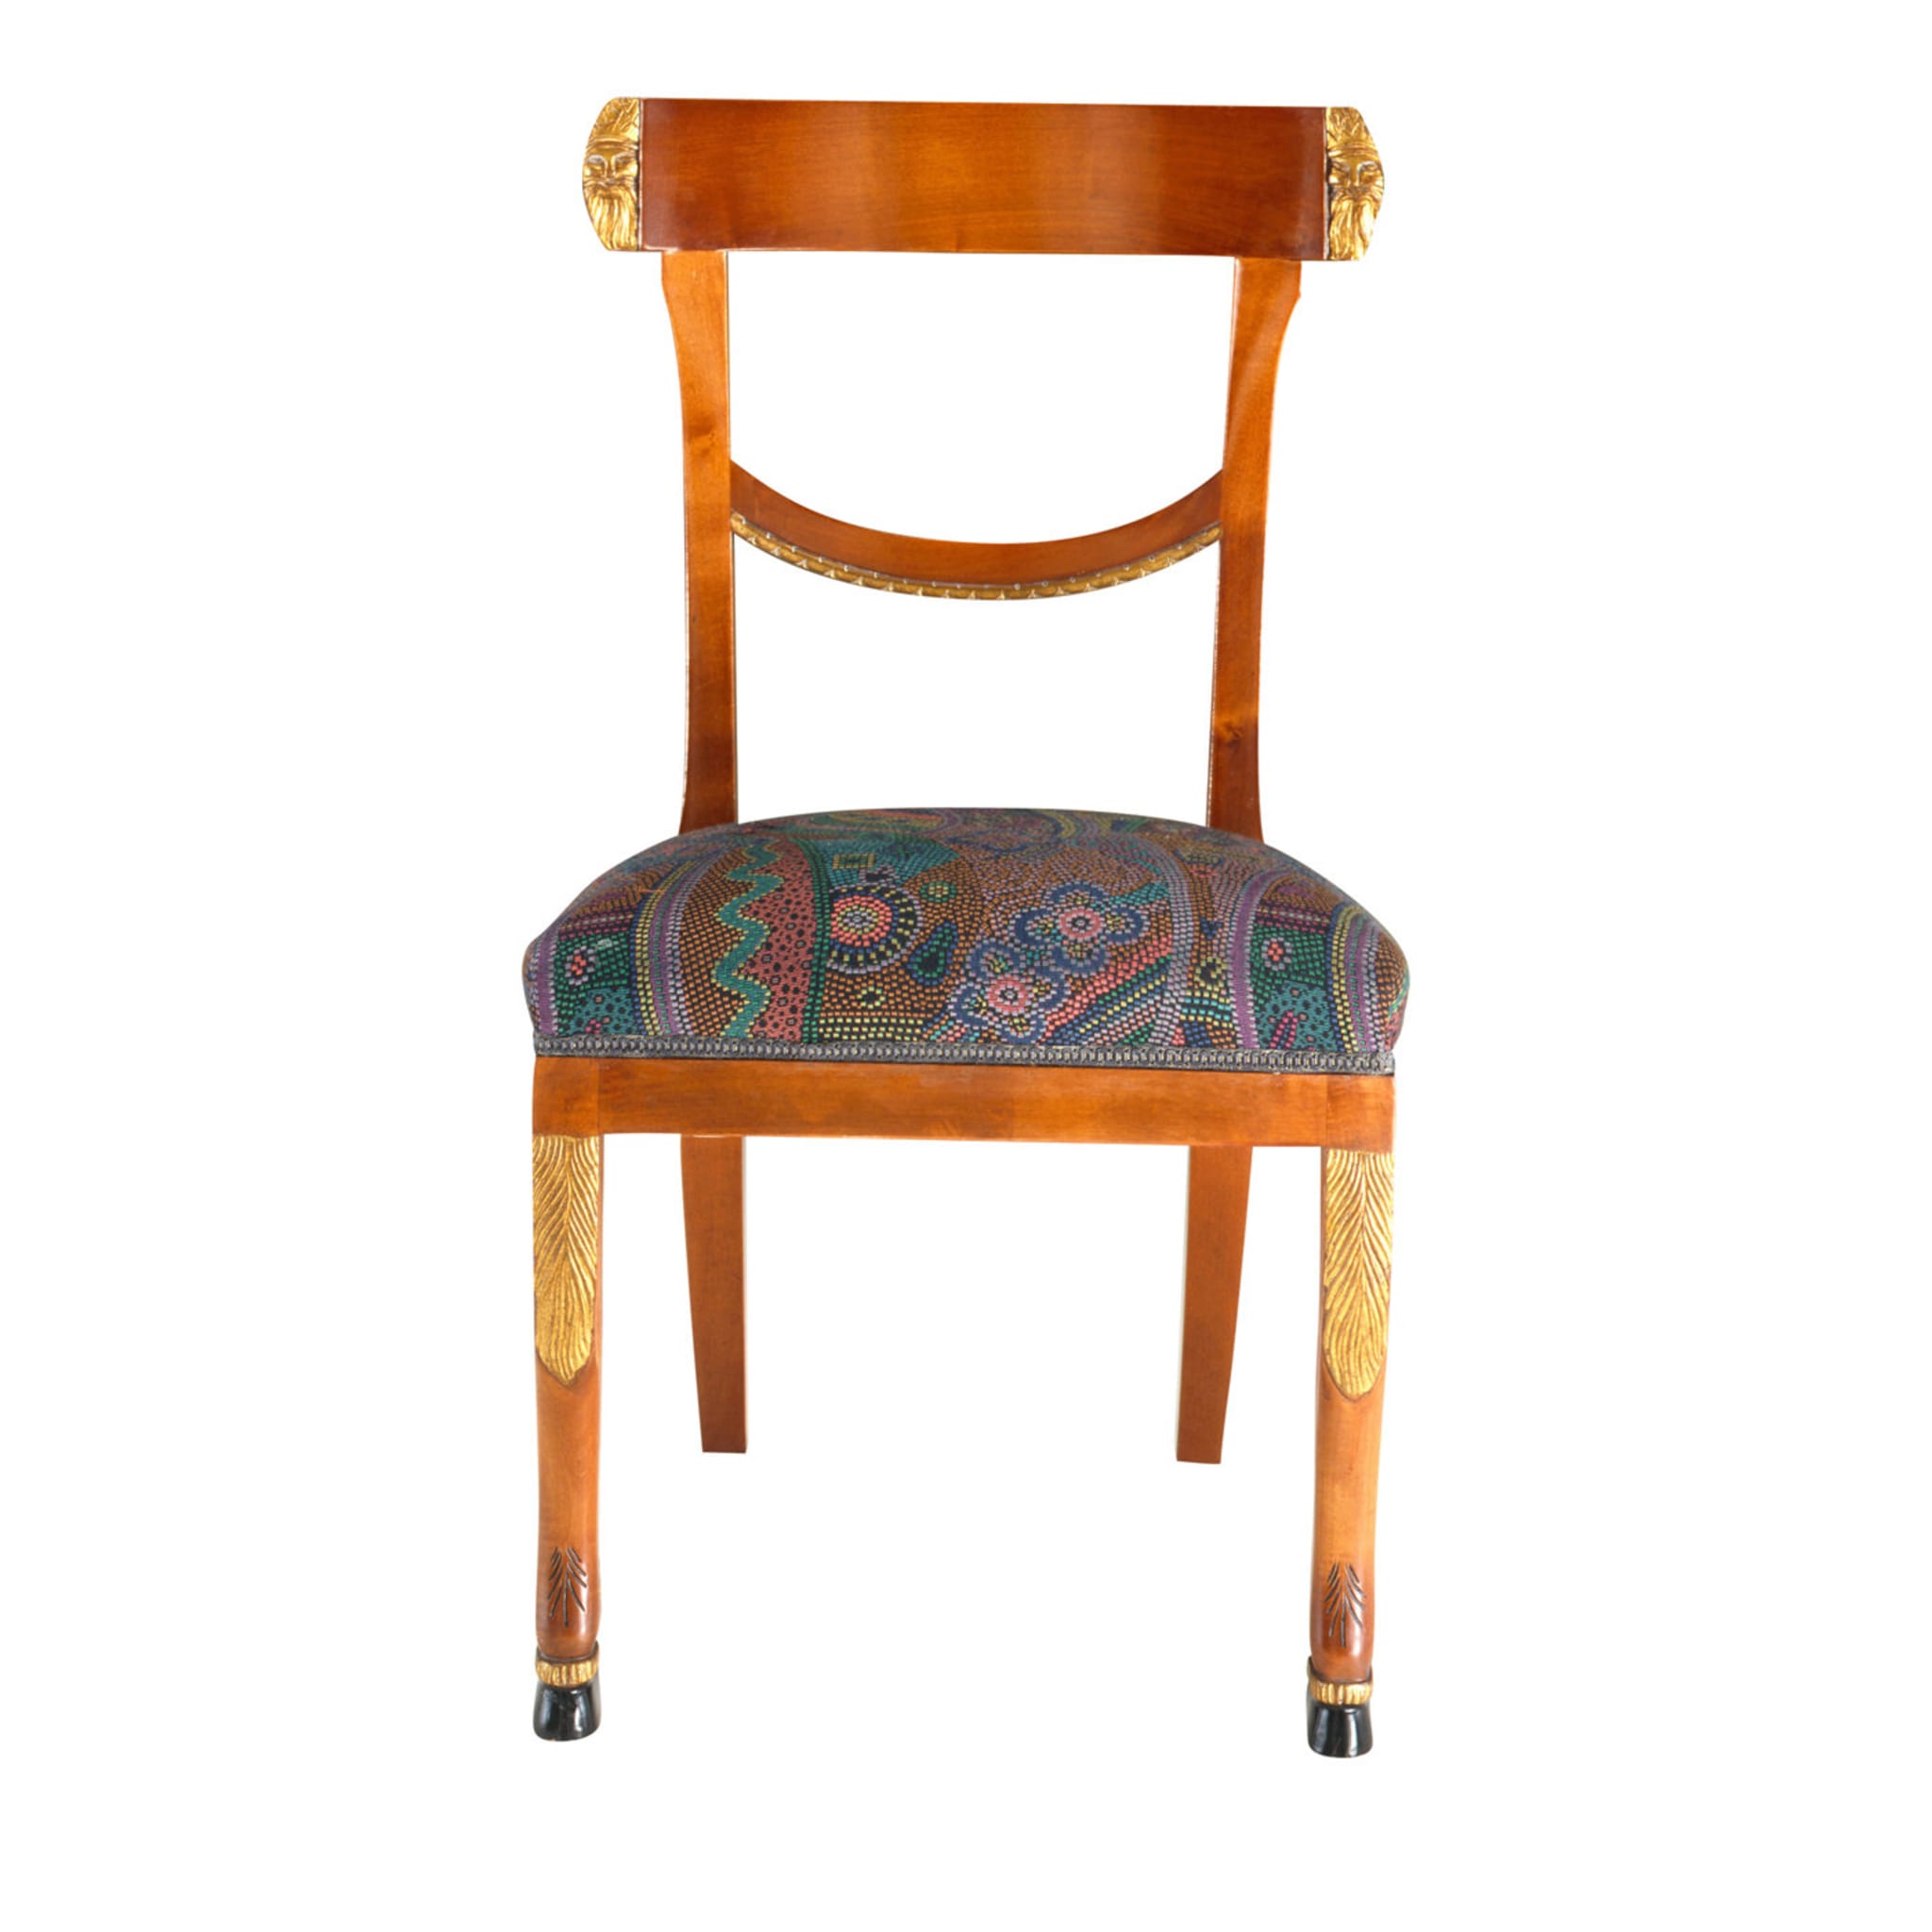 Neoclassic Chair #1 - Main view